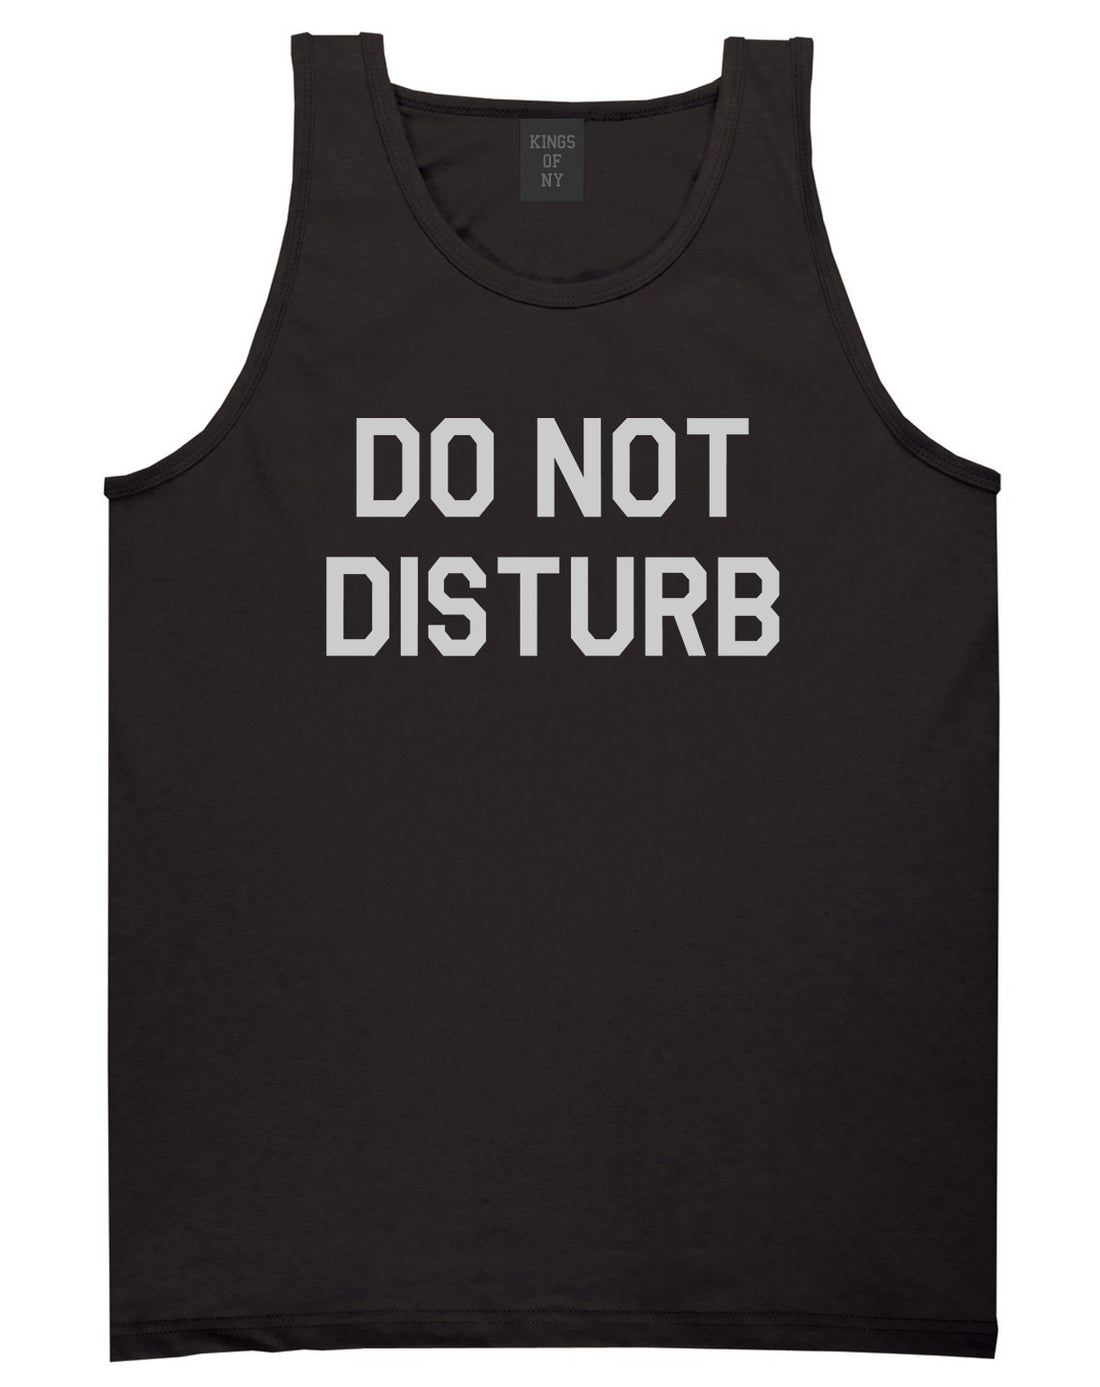 Do_Not_Disturb Mens Black Tank Top Shirt by Kings Of NY